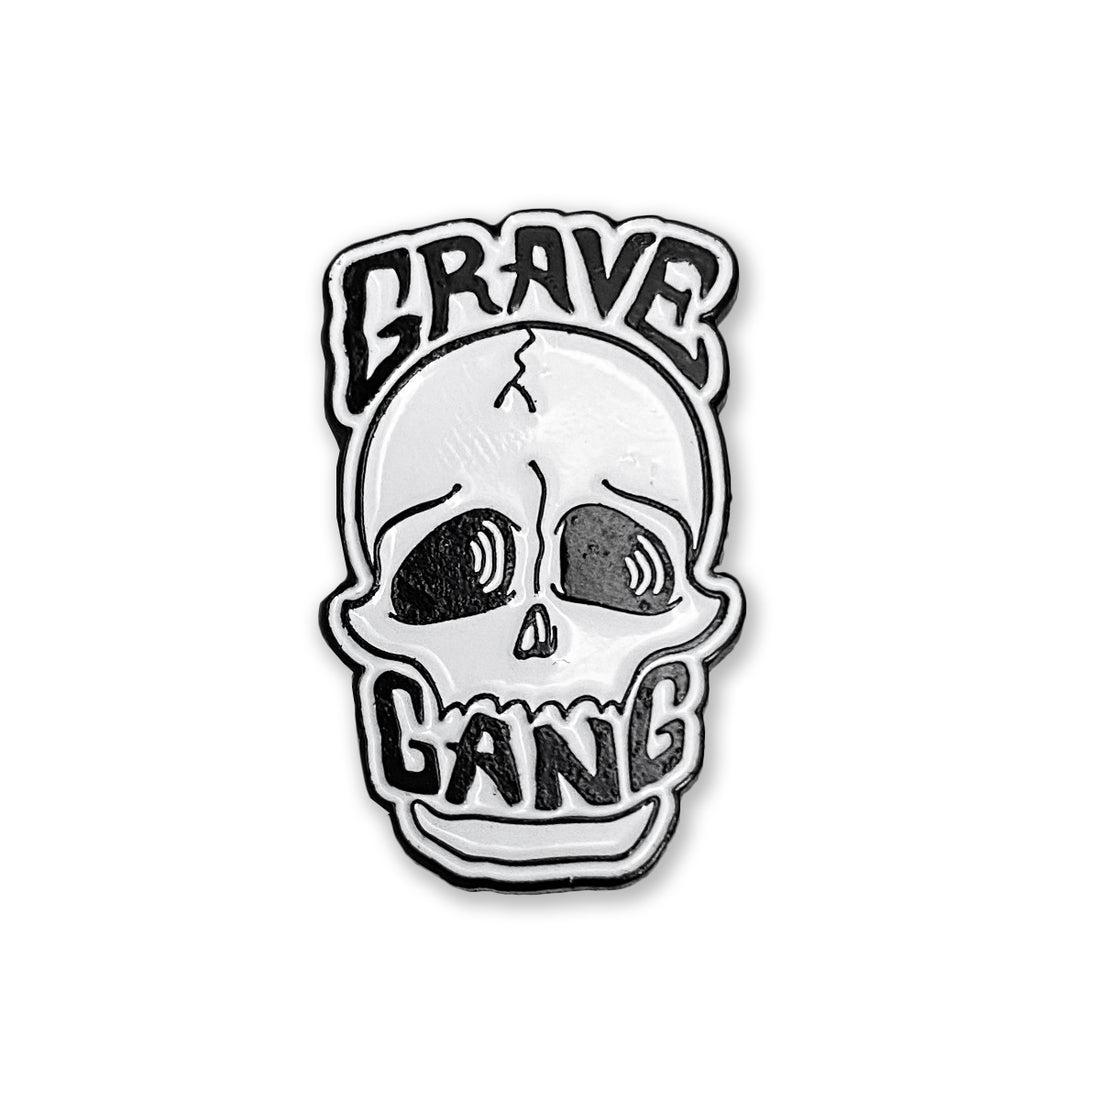 Grave Gang - Skull - Lapel Pin